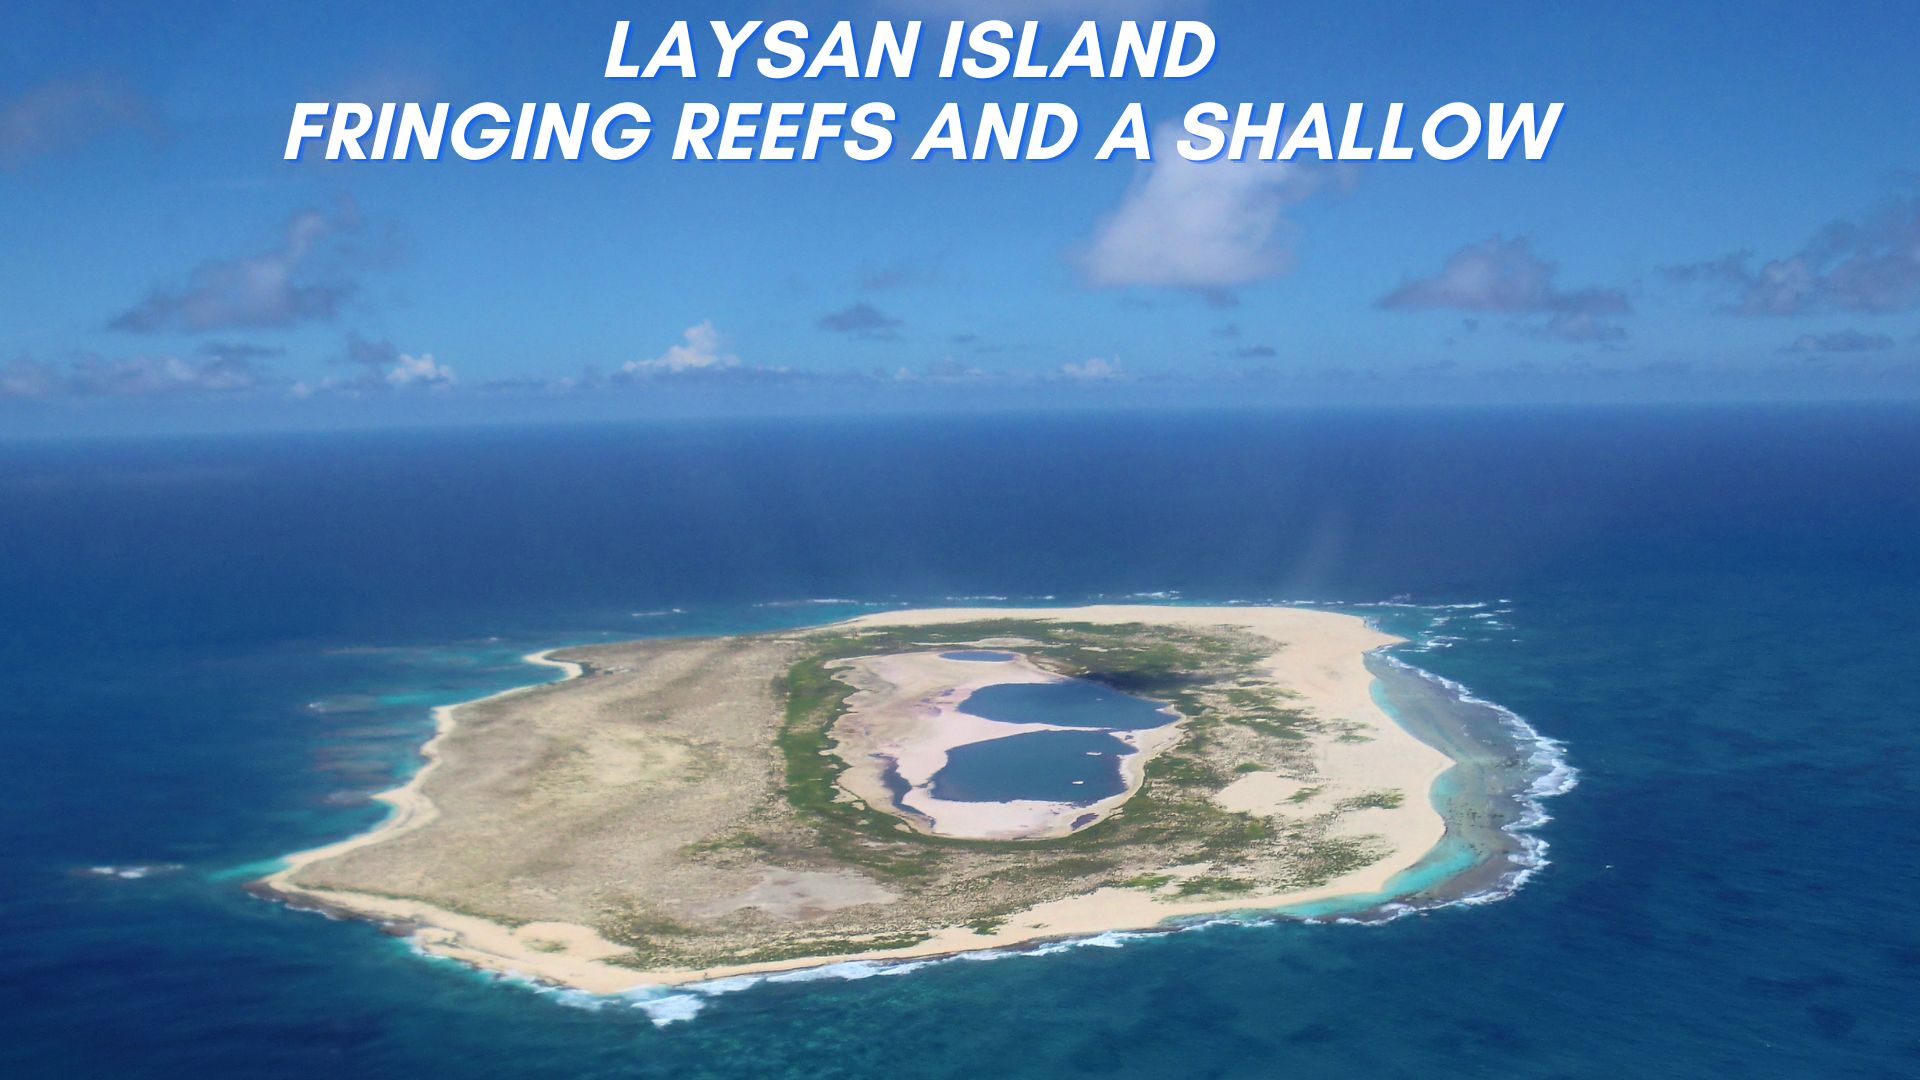 Laysan Island - Shallow And Fringing Reefs